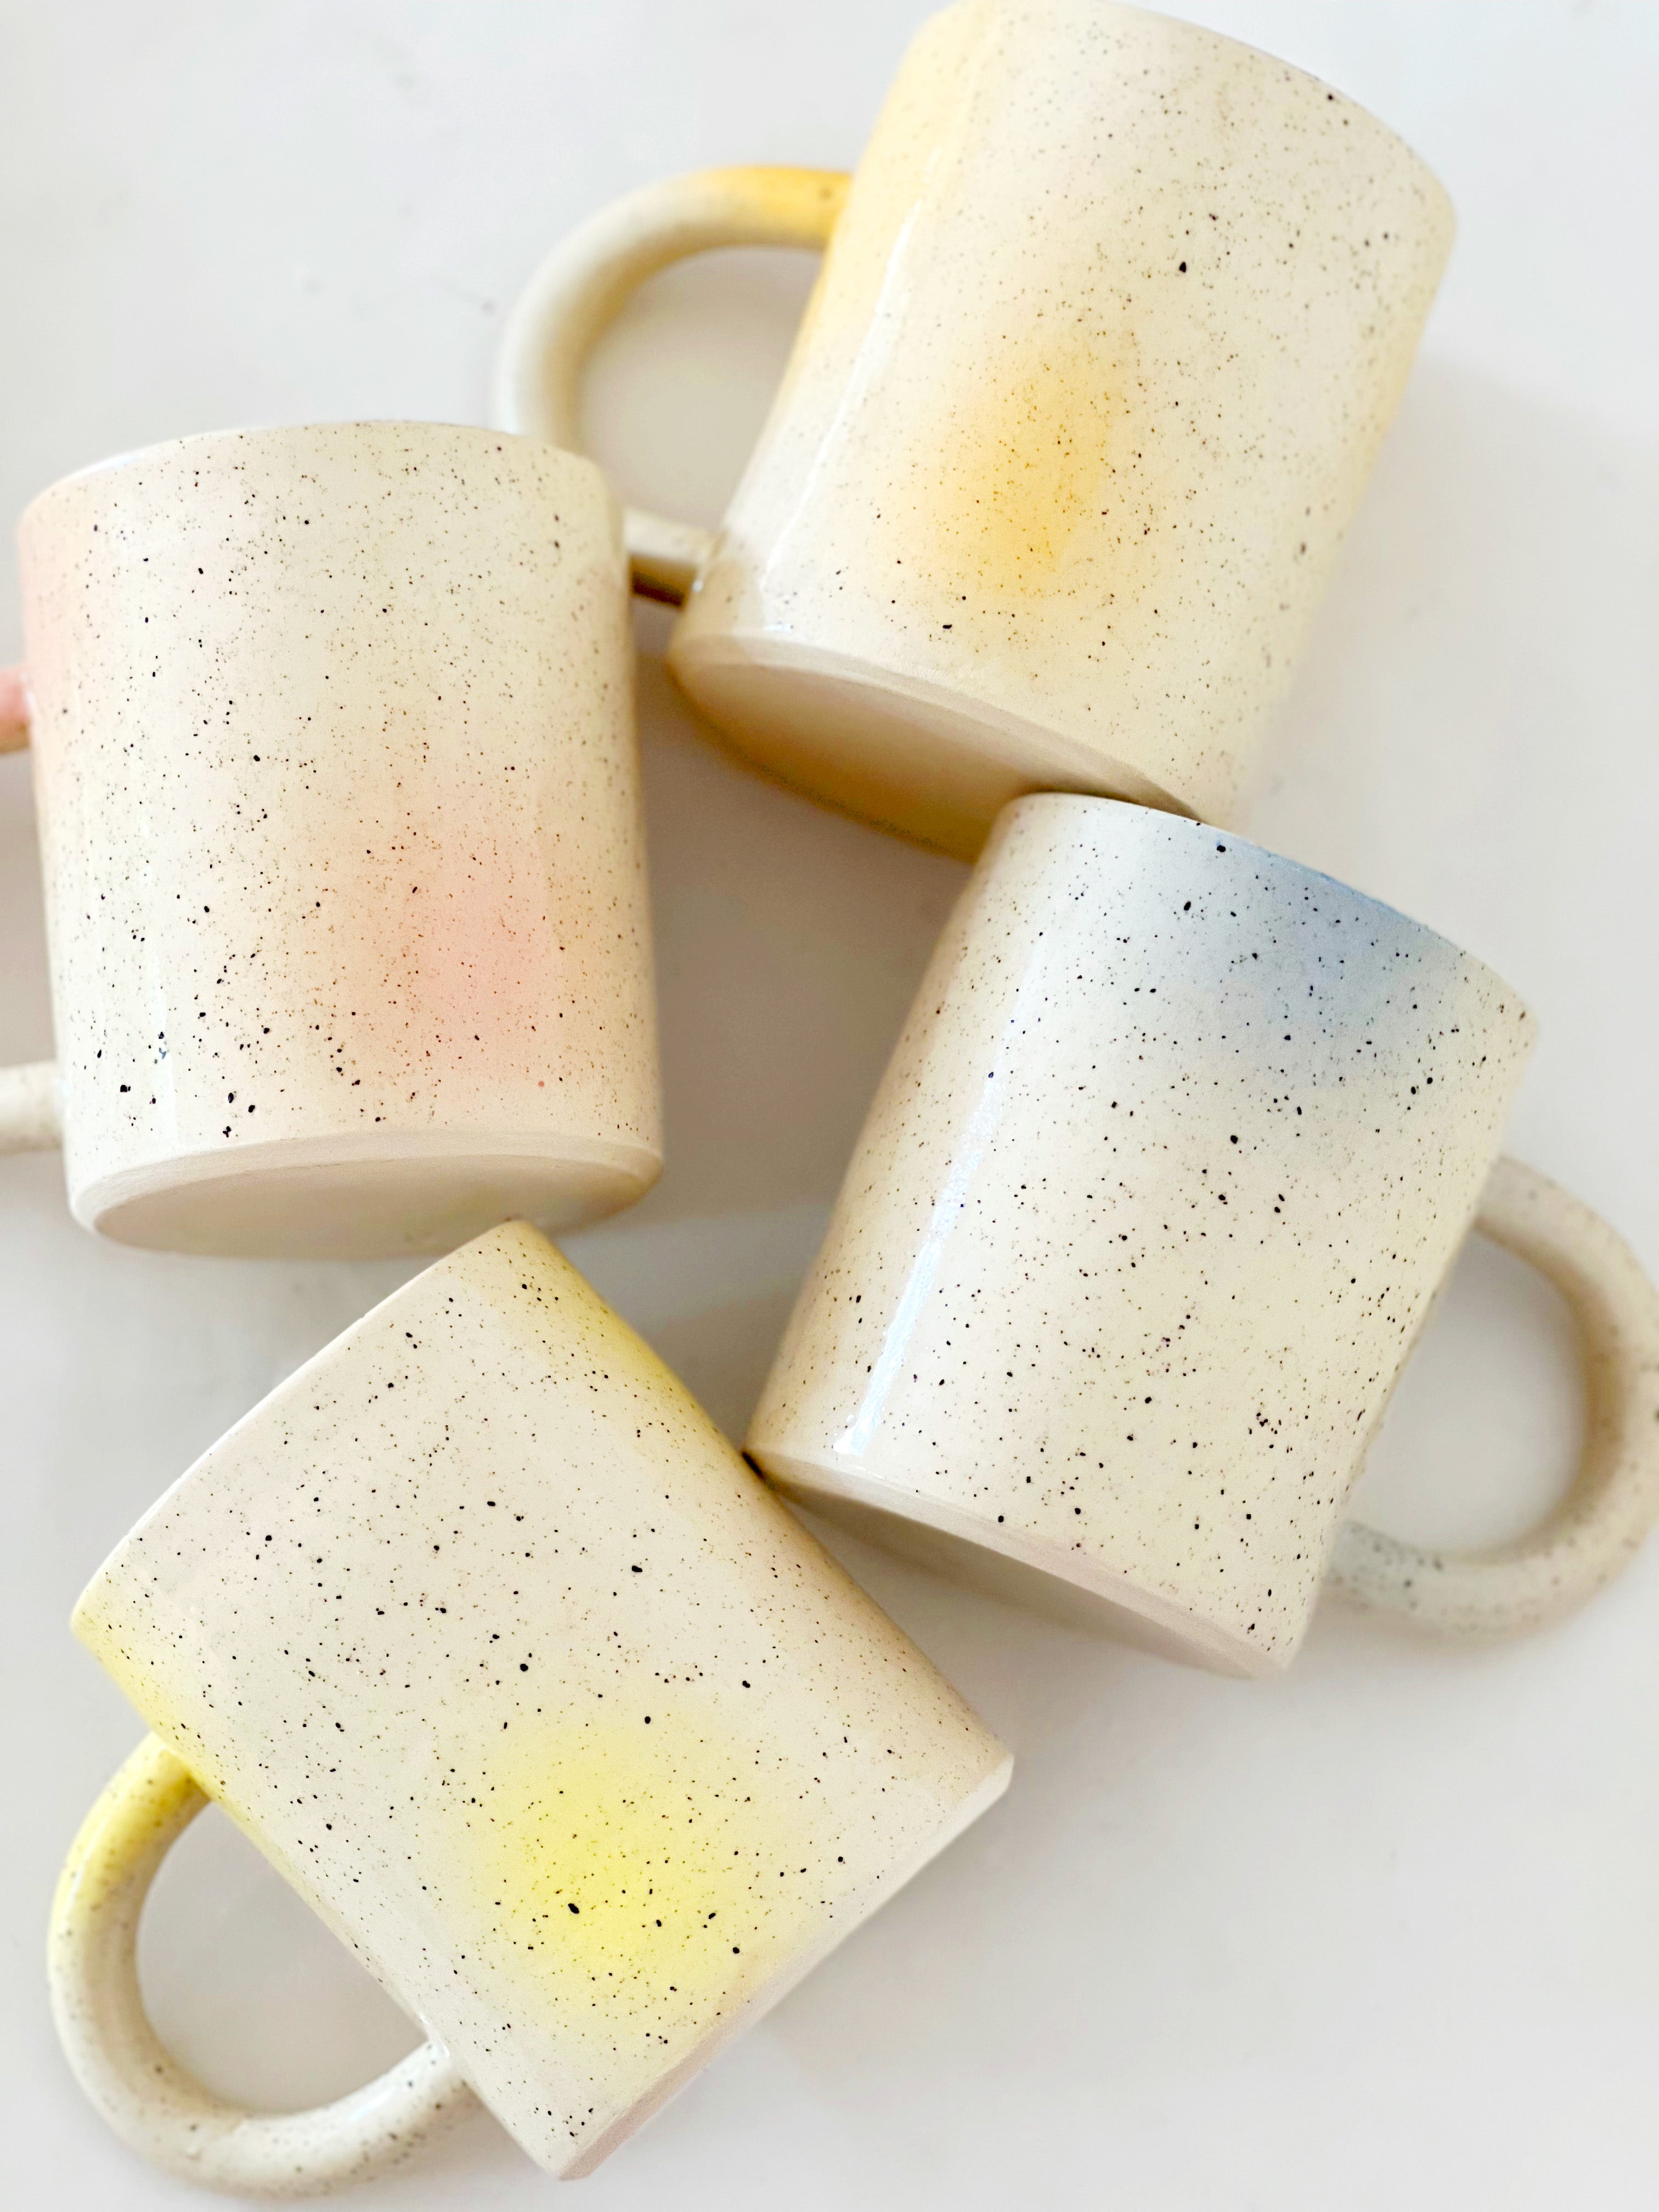 Large Soft Light Sprinkles Mug